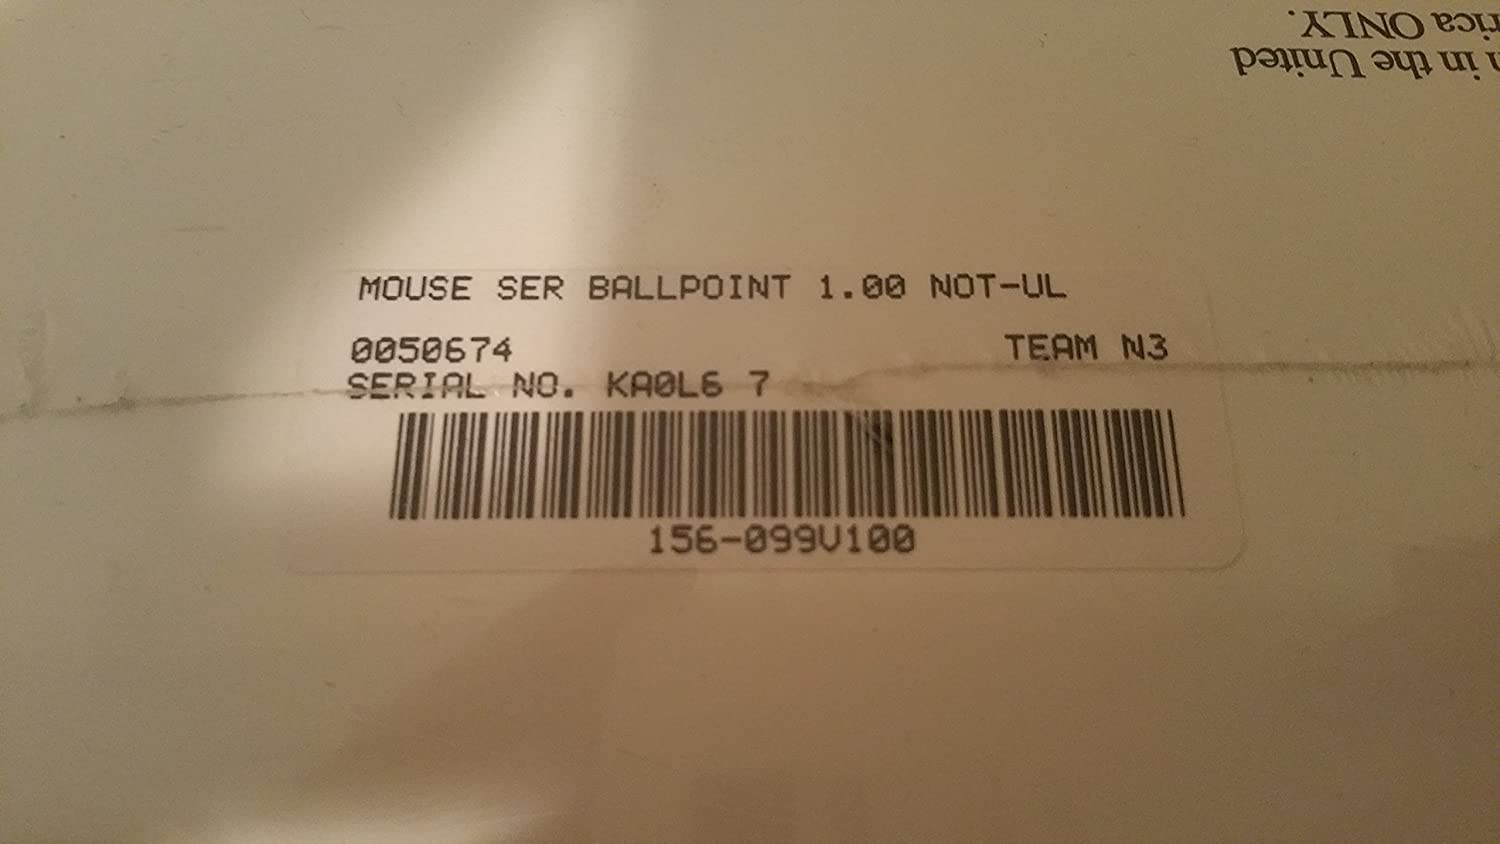 Microsoft BallPoint mouse 2zHx